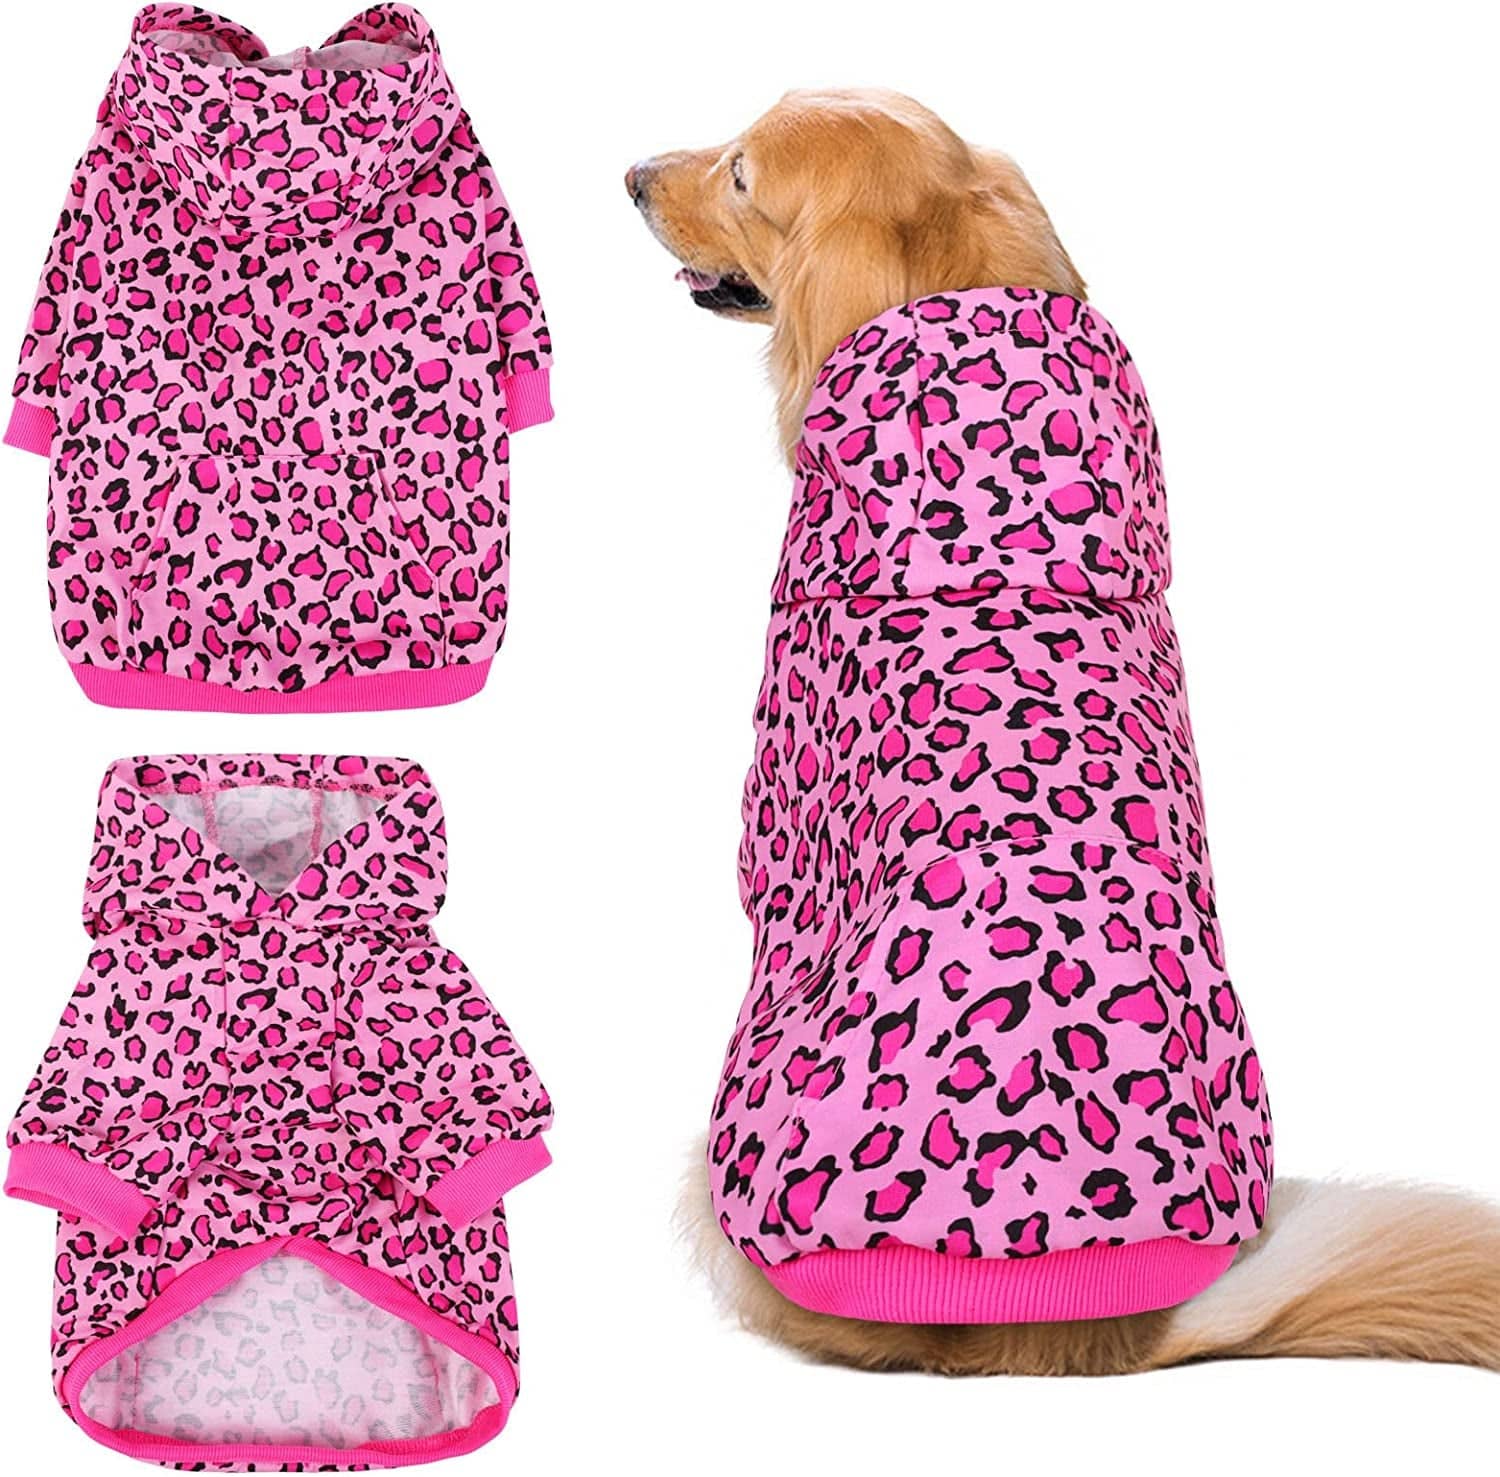 AOFITEE Dog Hoodie, Leopard Printed Dog Hoodies Sweatshirt, Winter War –  KOL PET